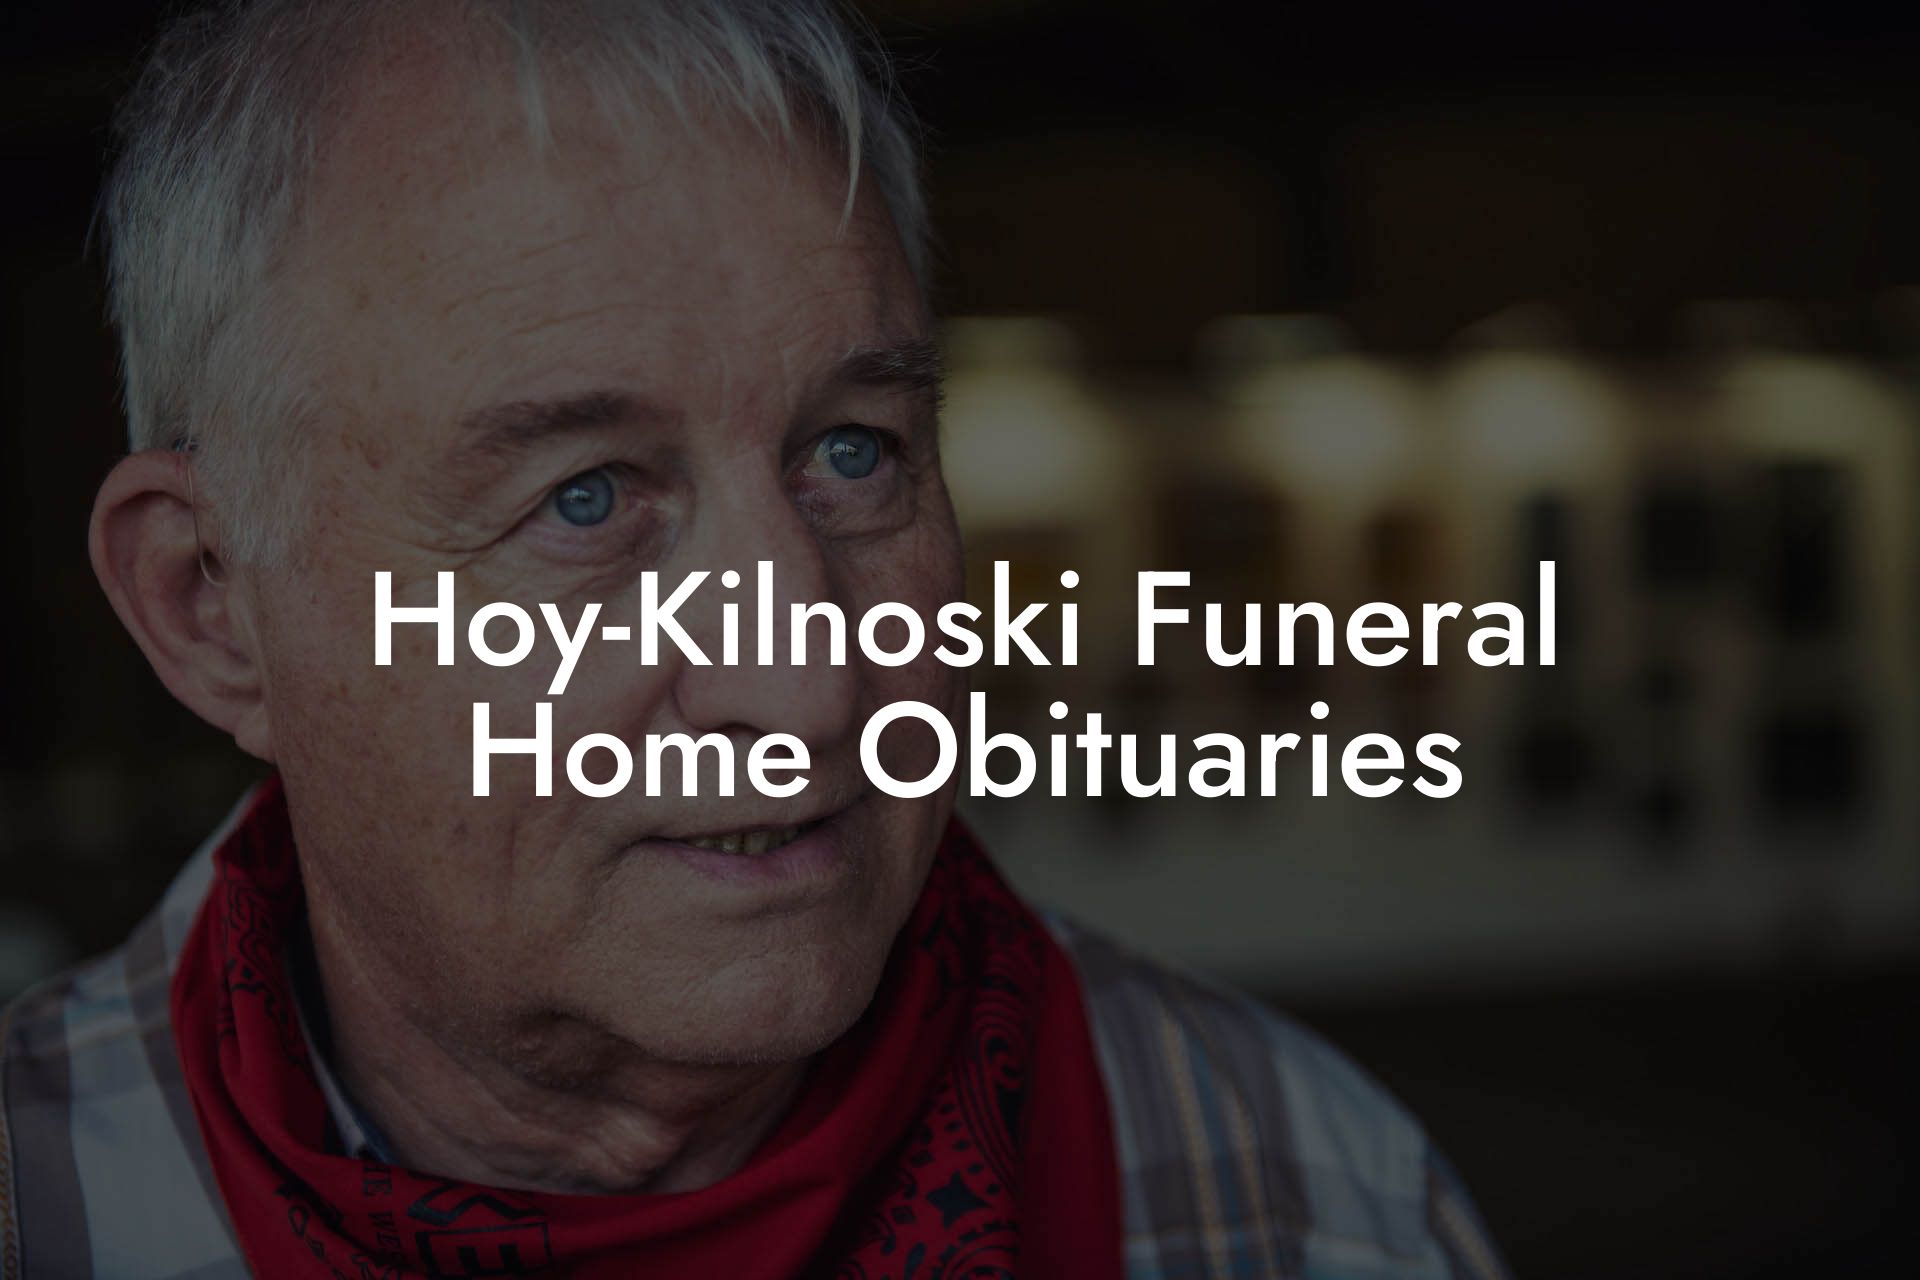 Hoy-Kilnoski Funeral Home Obituaries